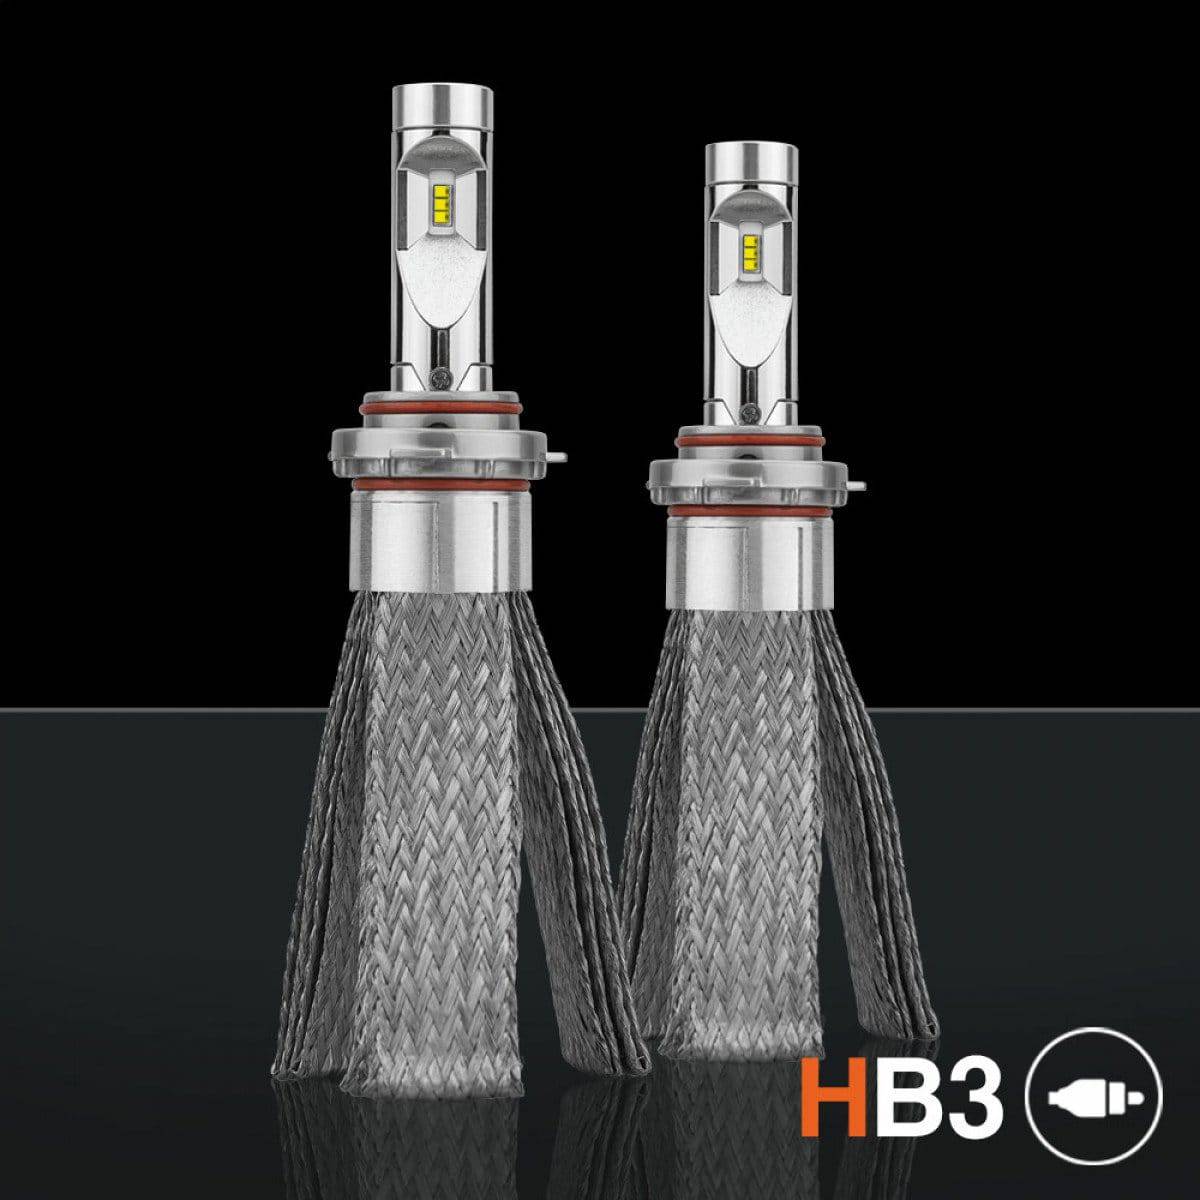 Stedi Copper Head HB3 (9005) LED Head Light Conversion Kit | Stedi